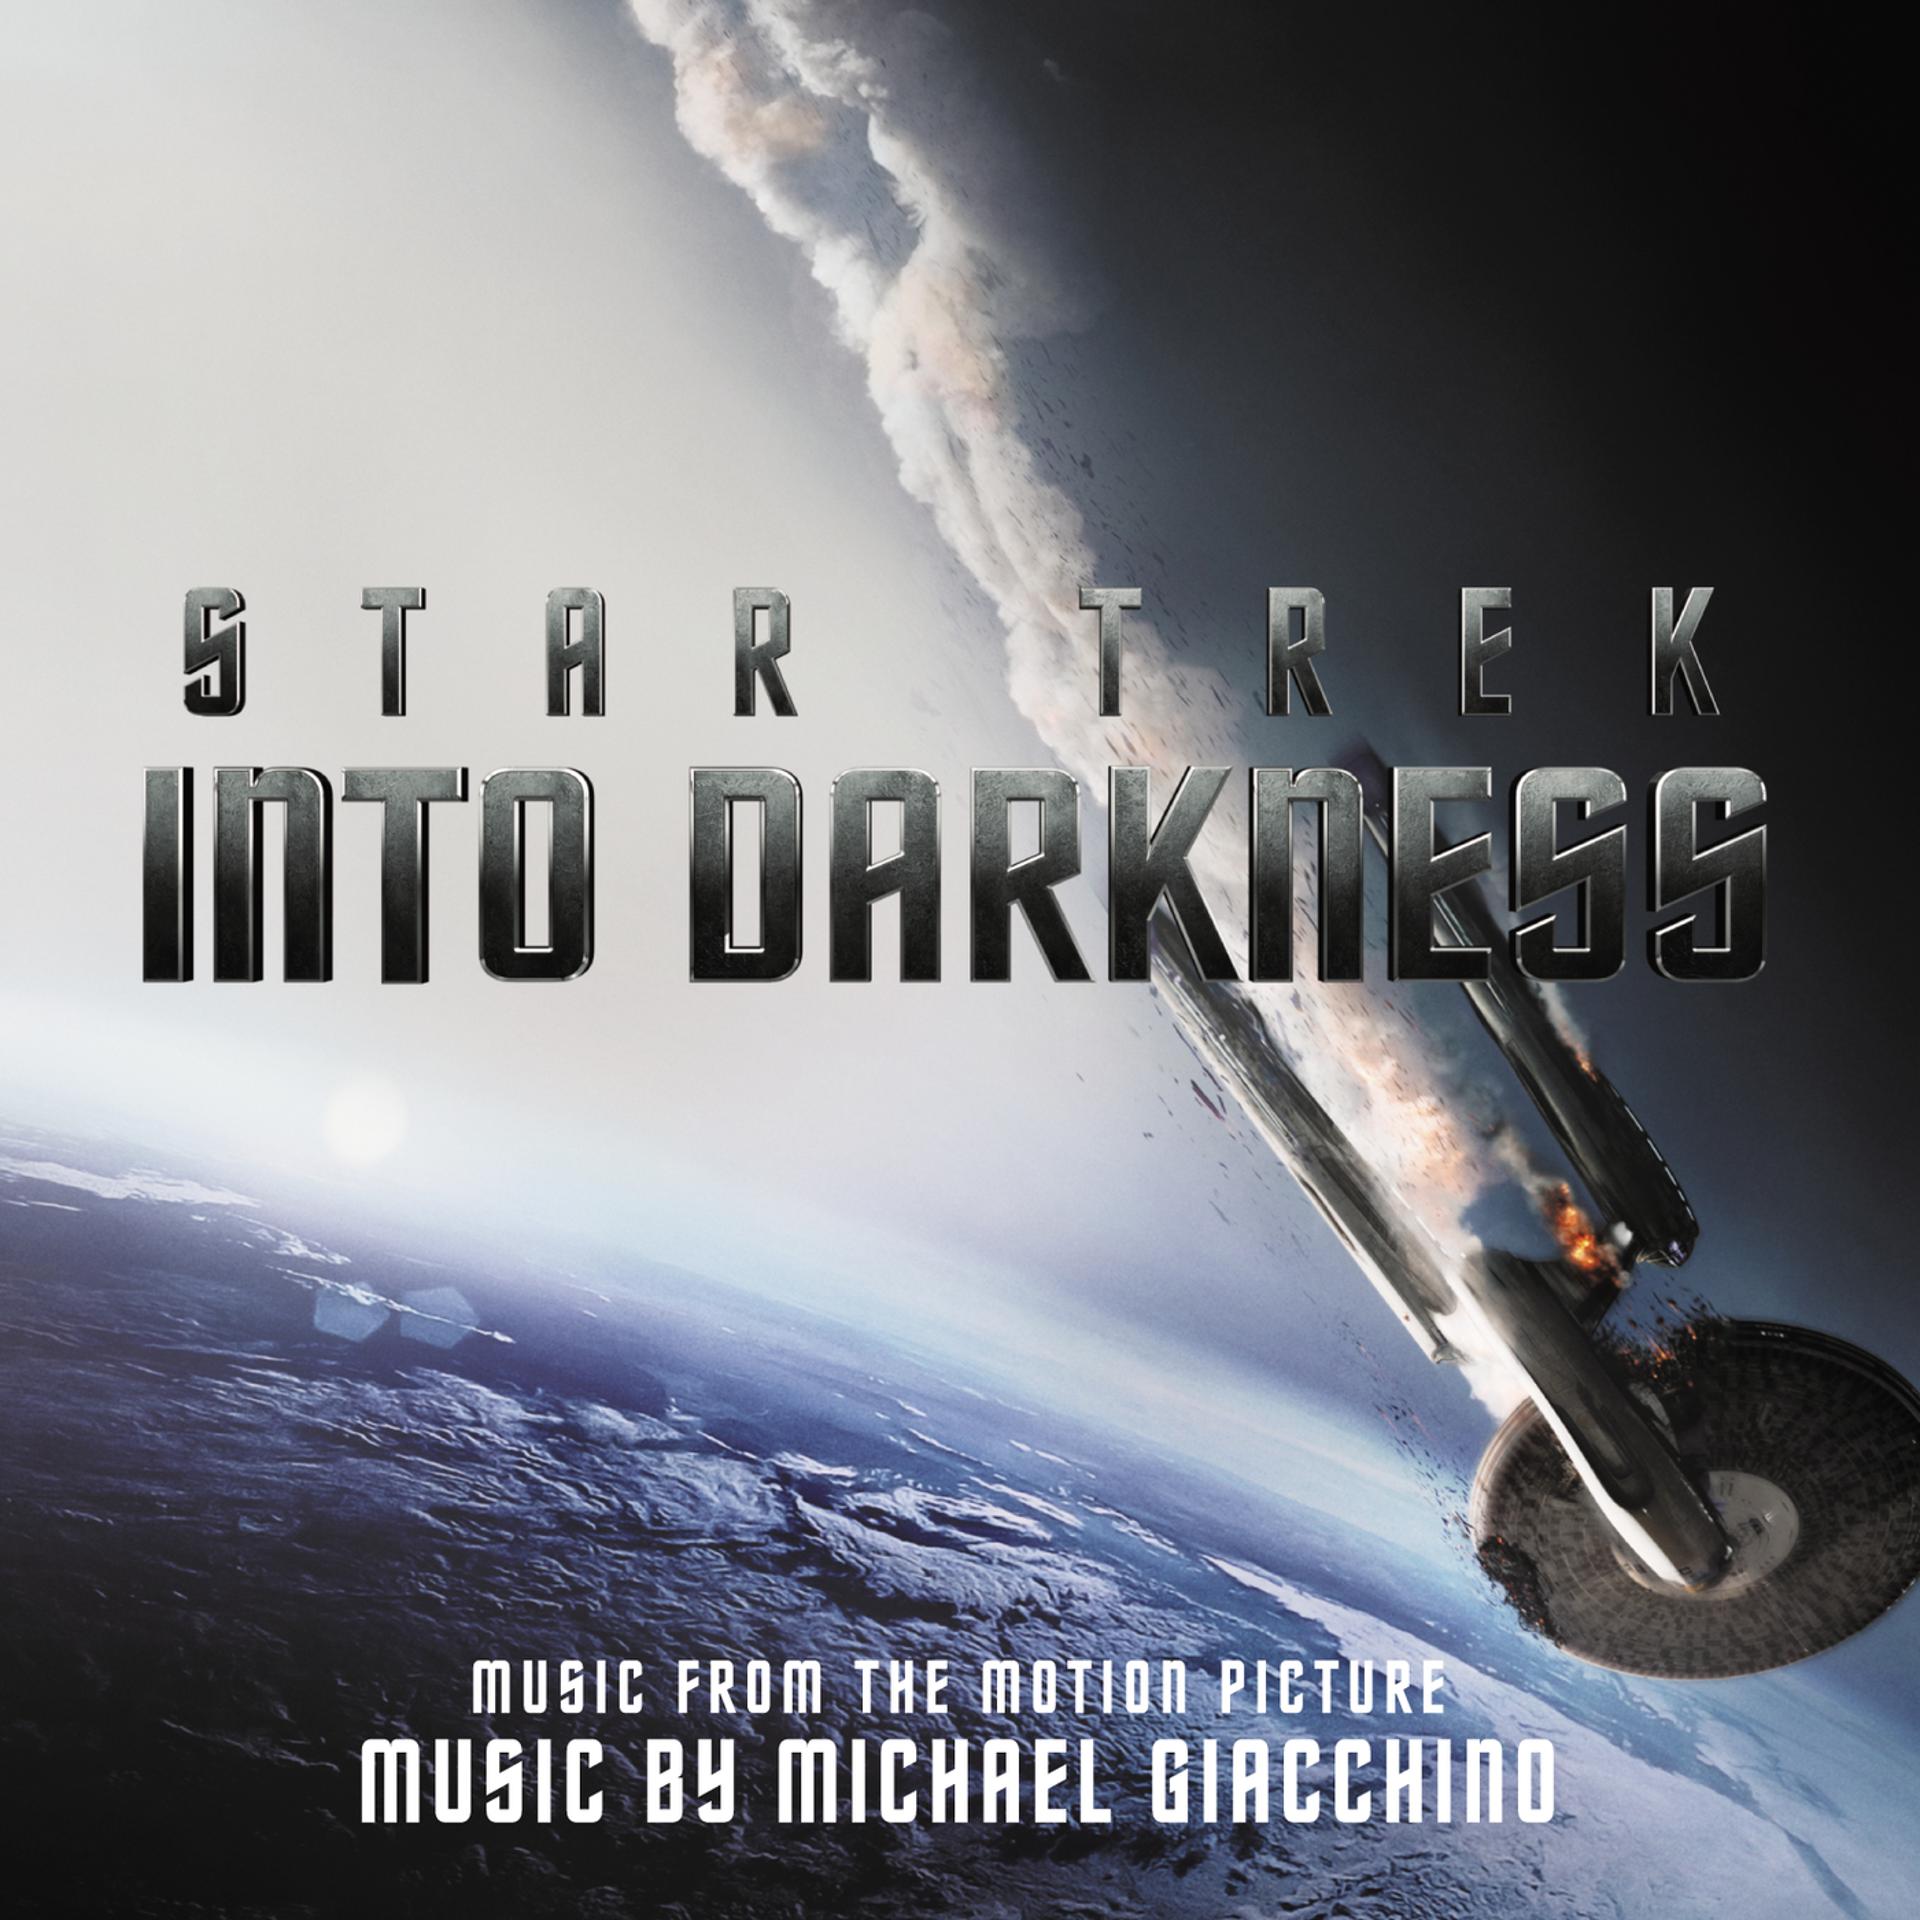 Постер к треку Michael Giacchino - Star Trek Main Theme